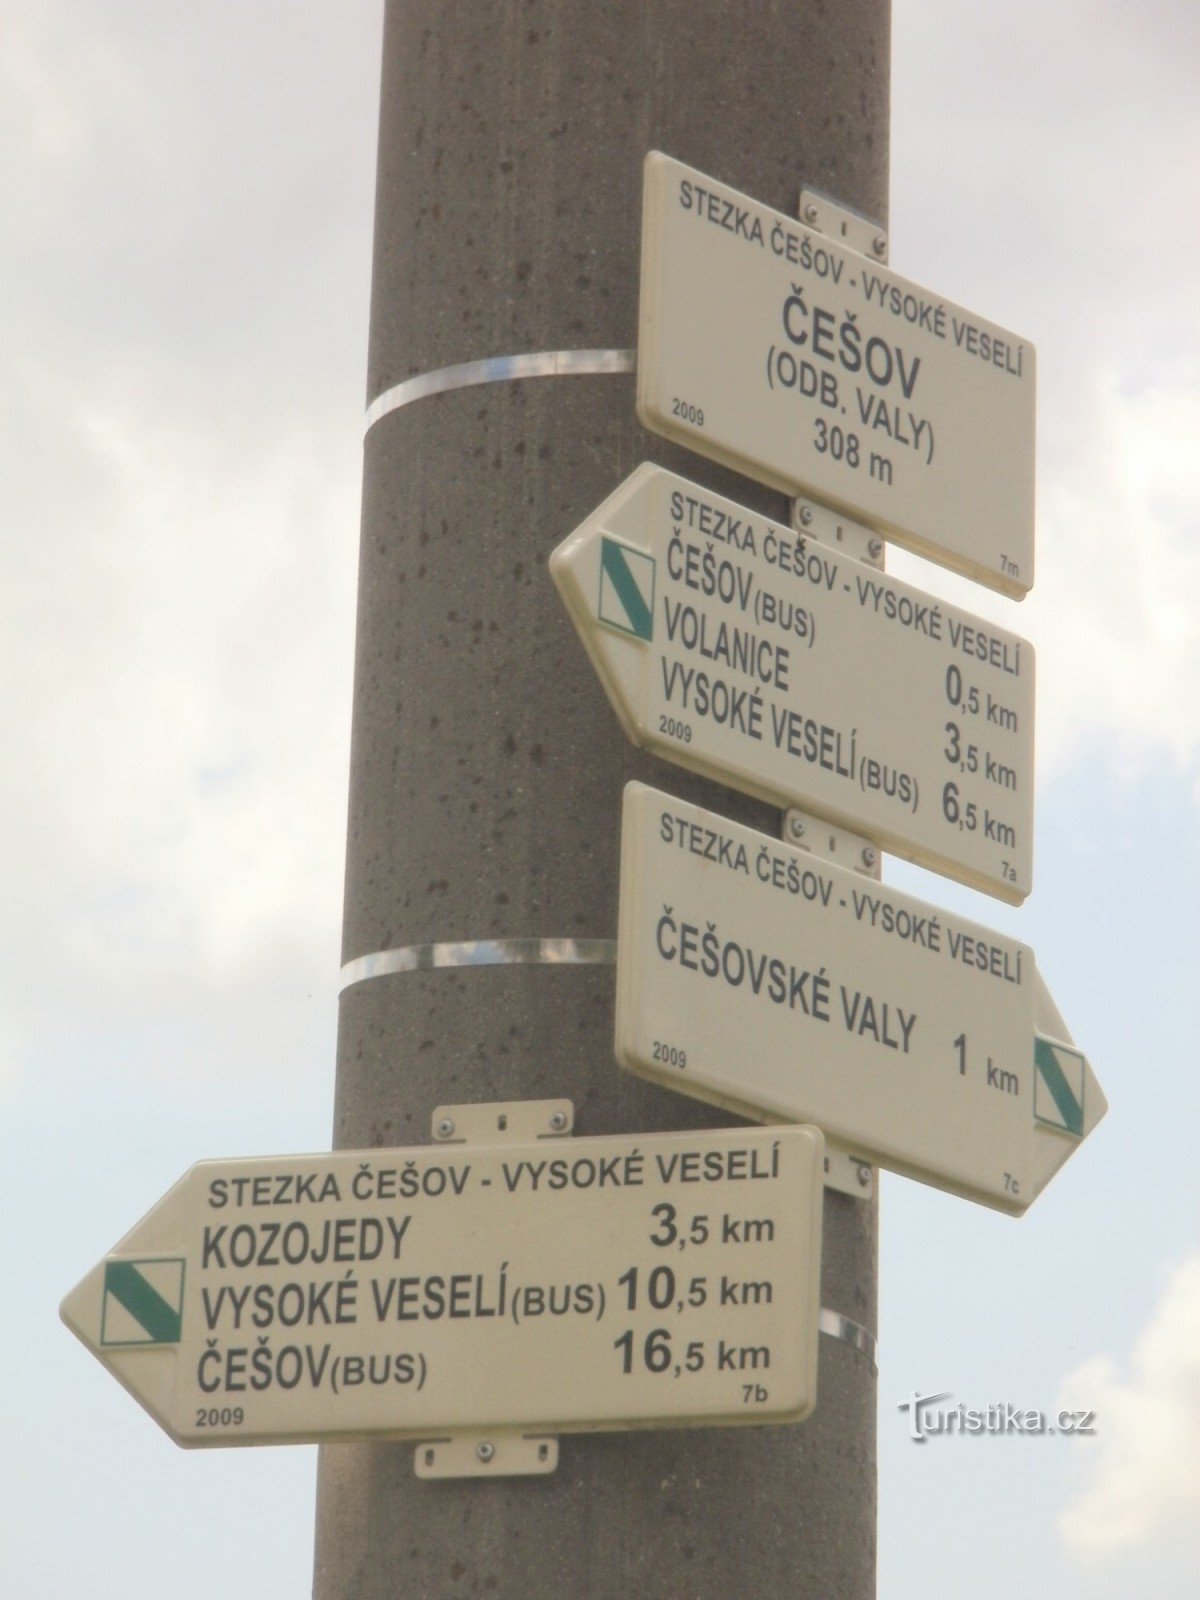 NS Češov-Vysoké Veselí - ešov rẽ vào thành lũy